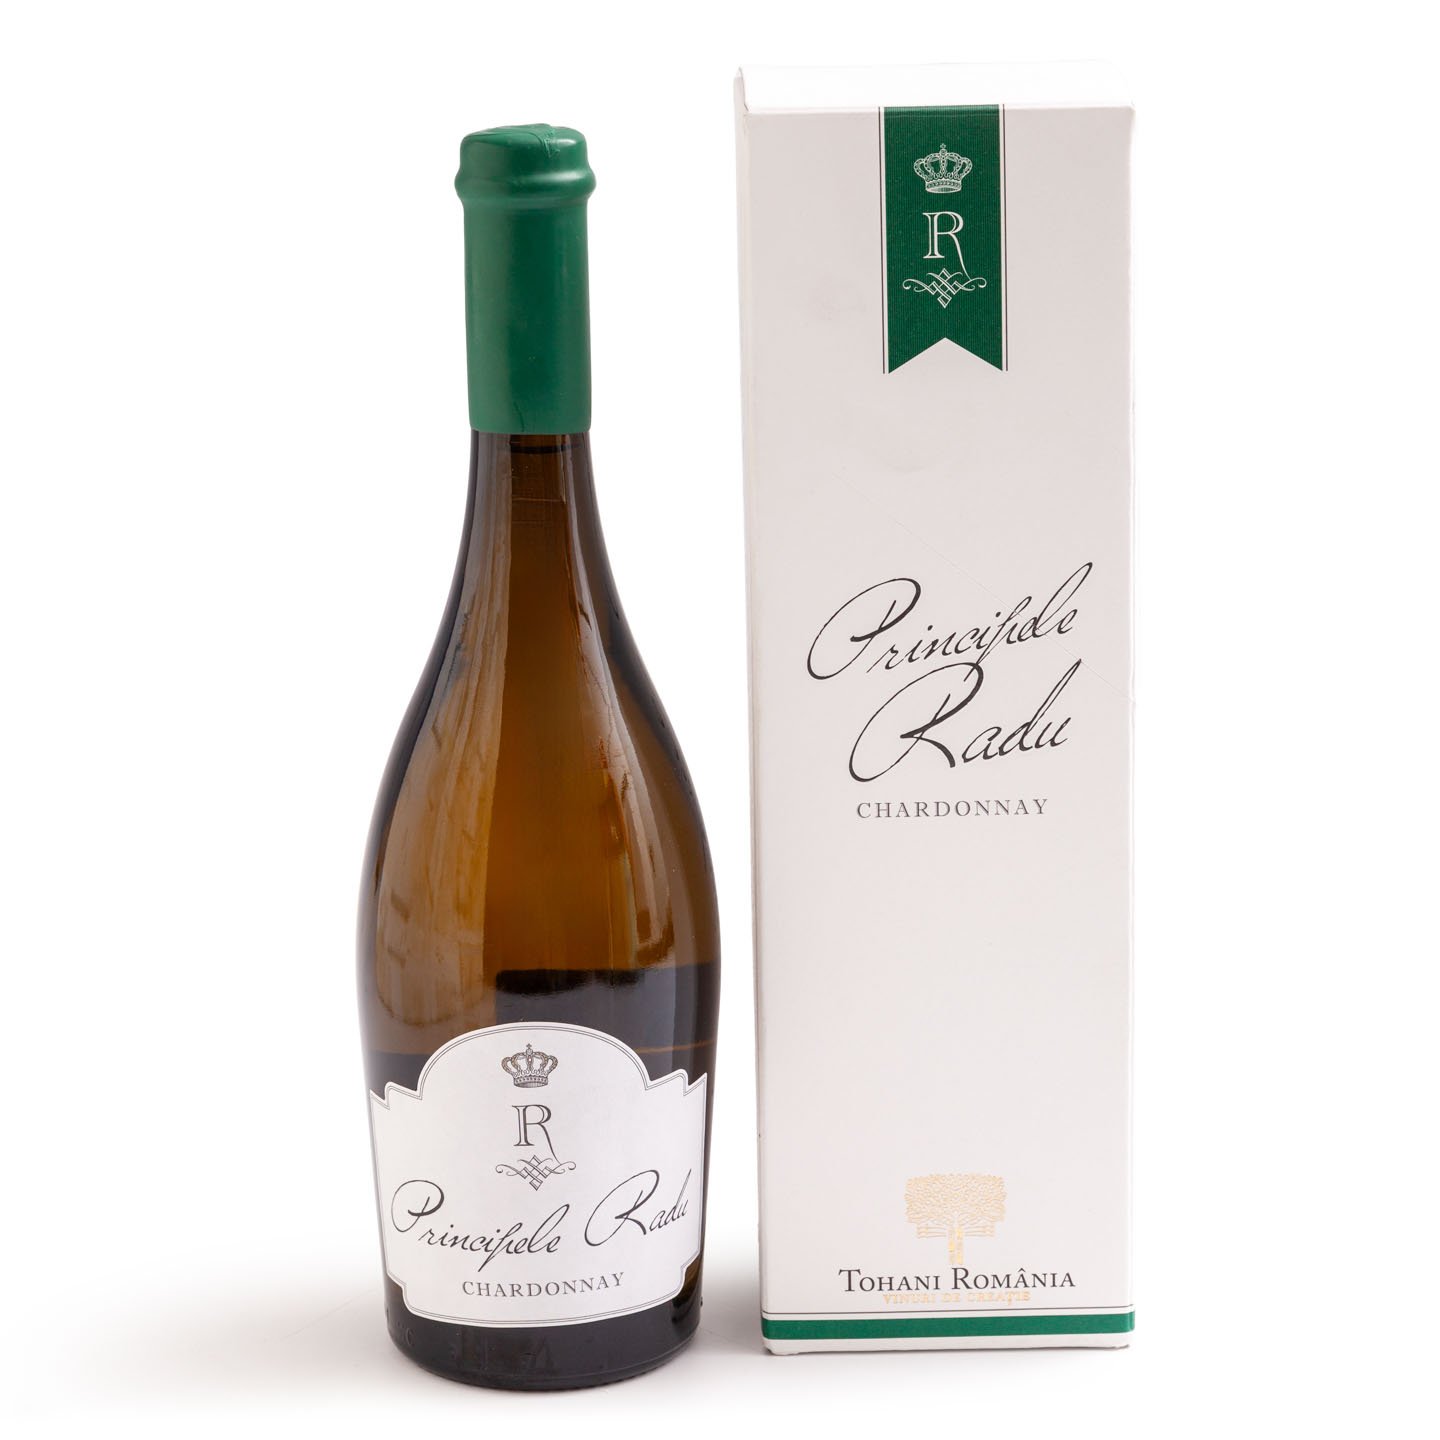 Vin Chardonnay Principele Radu Domeniile Tohani  0.75L